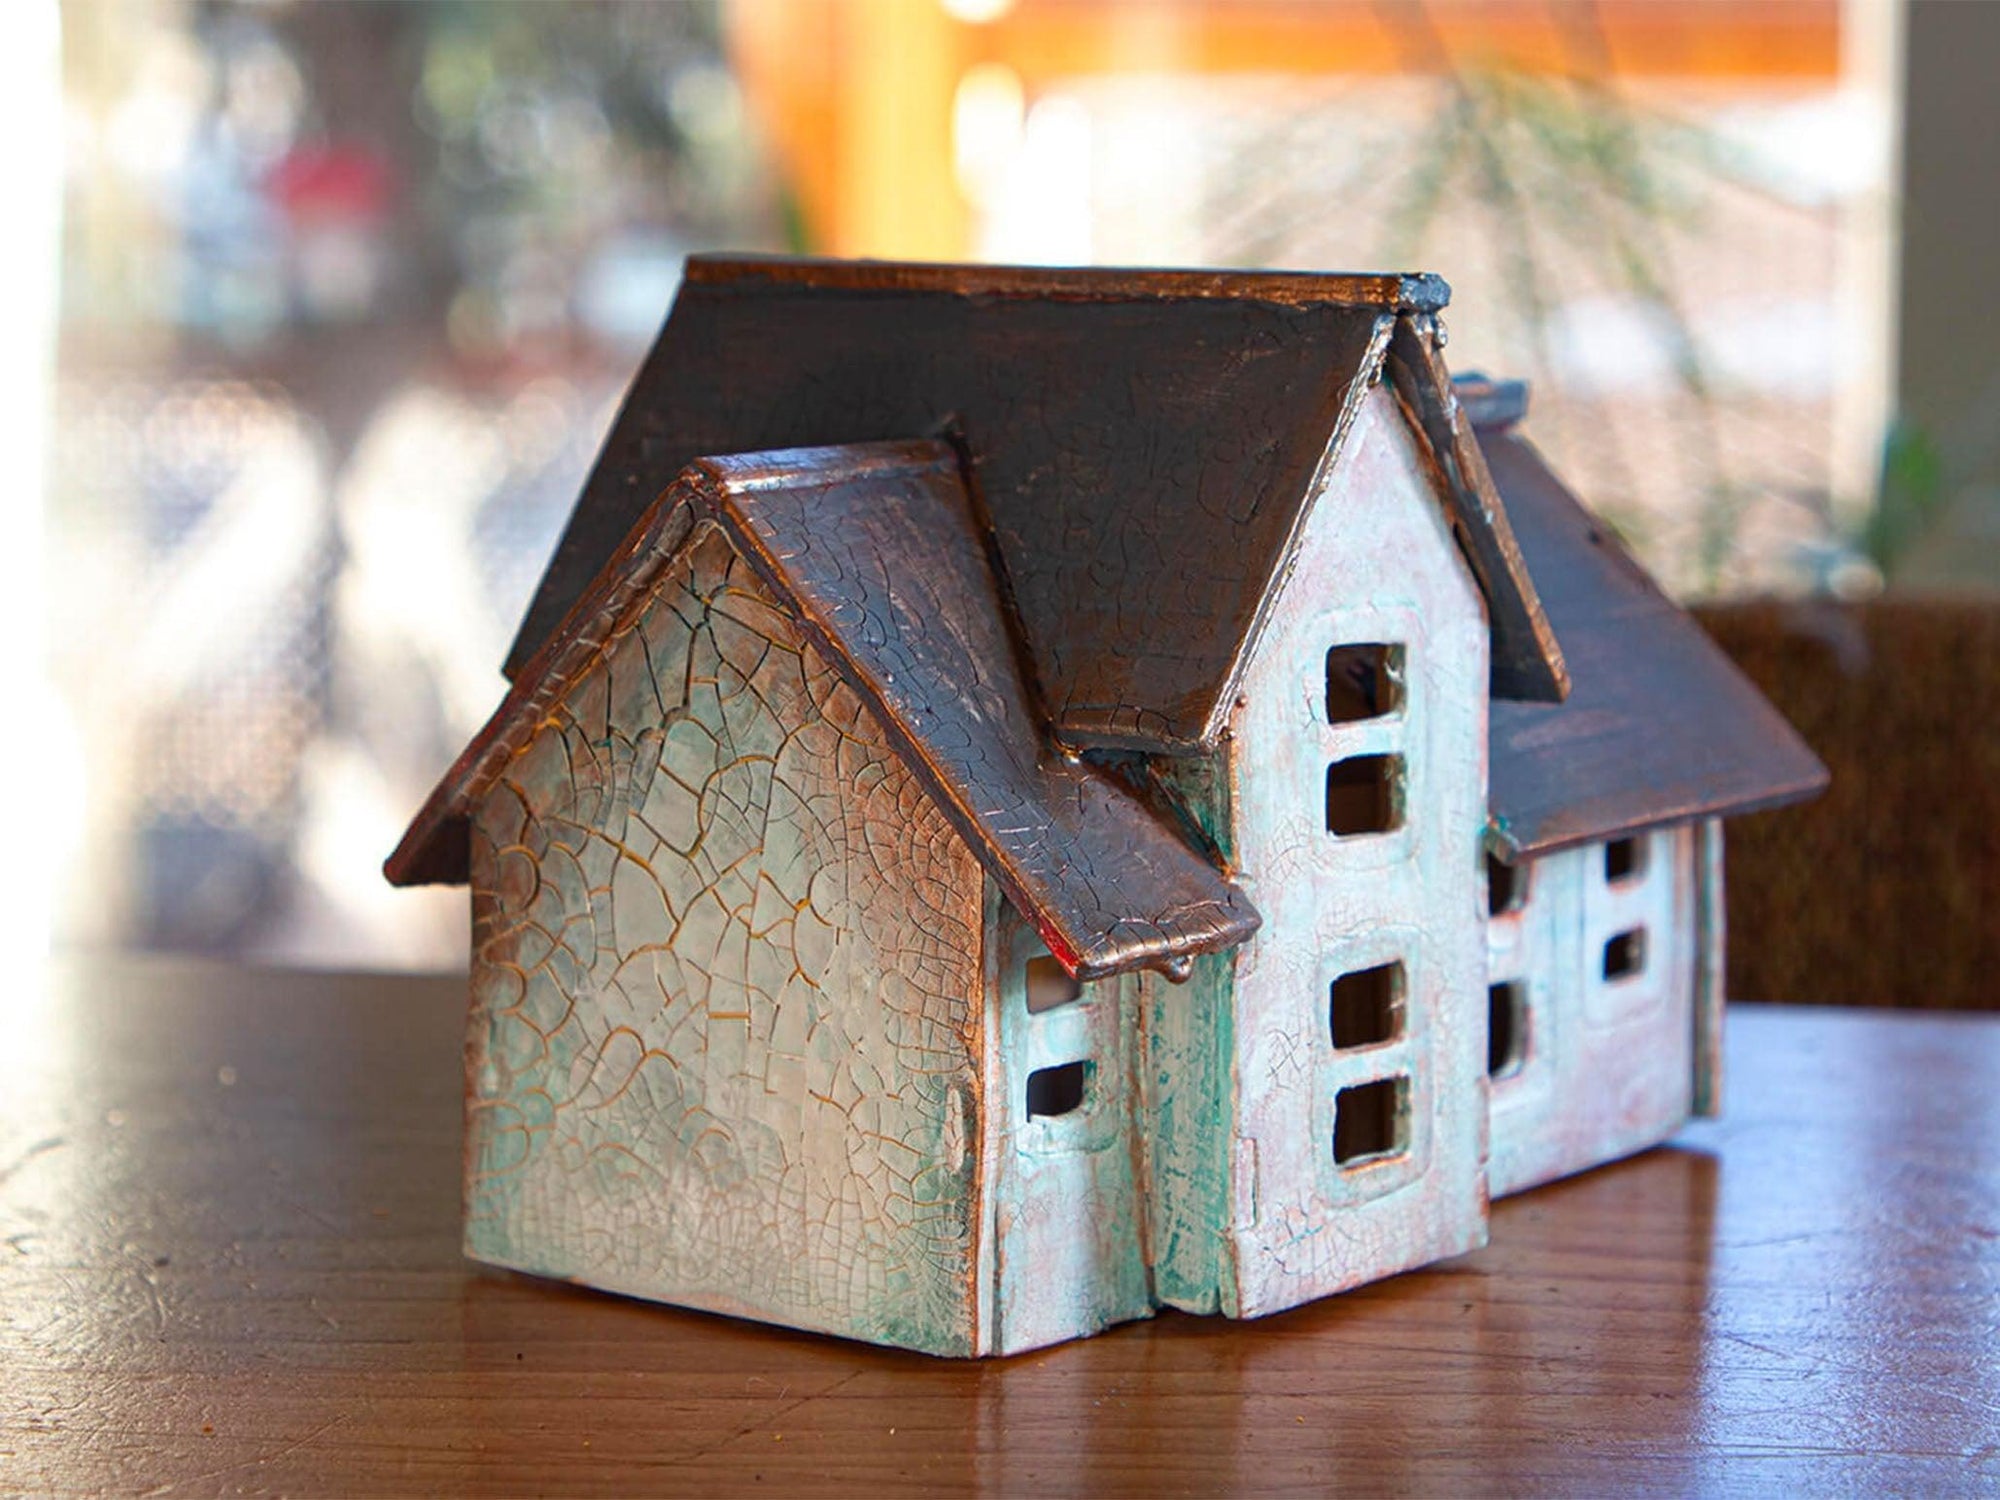 Cracked Glaze Effect on Tiny  House - Tri-Art Mfg.